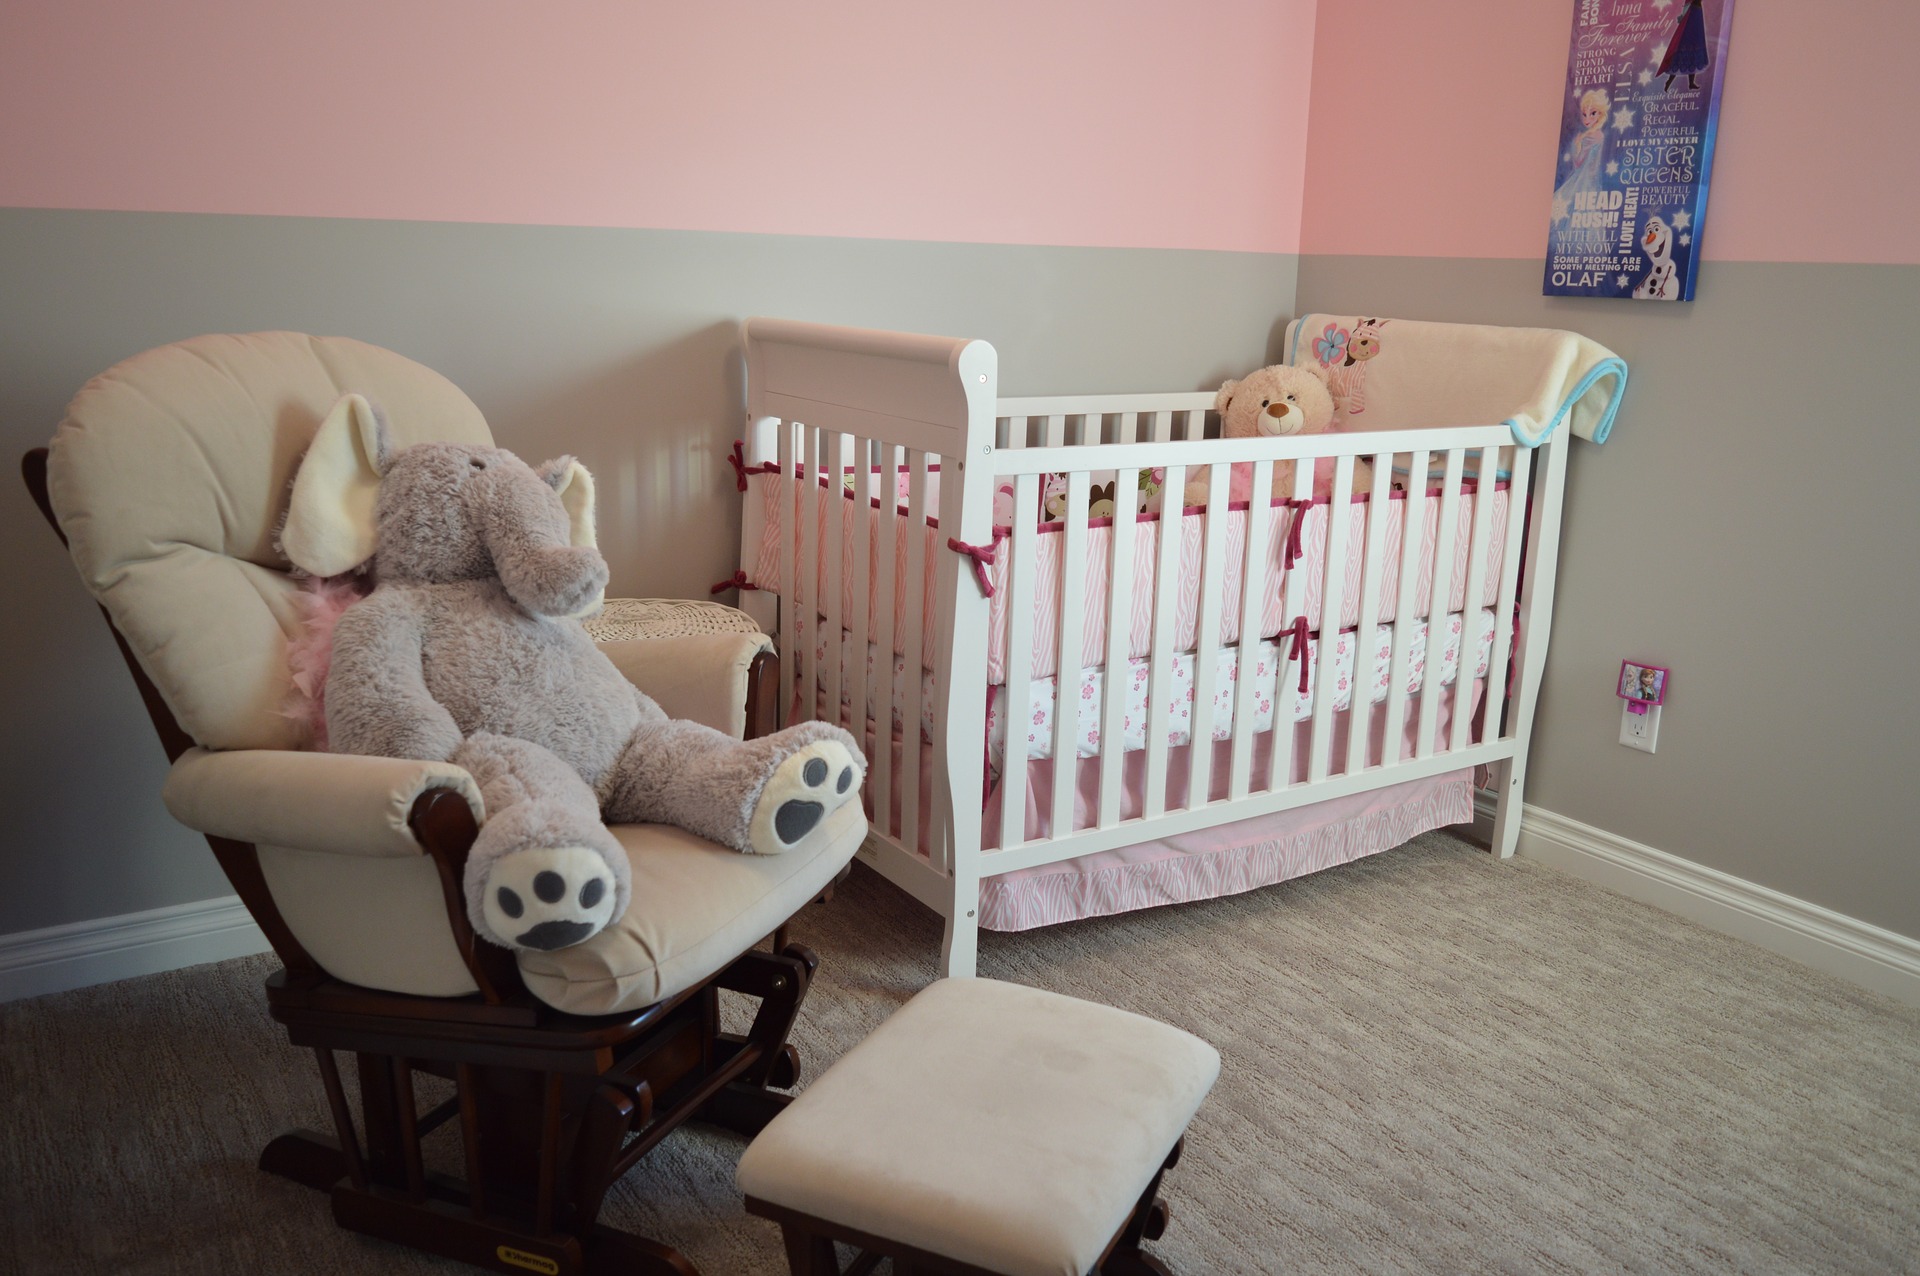 Baby nursery room cot and breastfeeding chair sleep options for baby